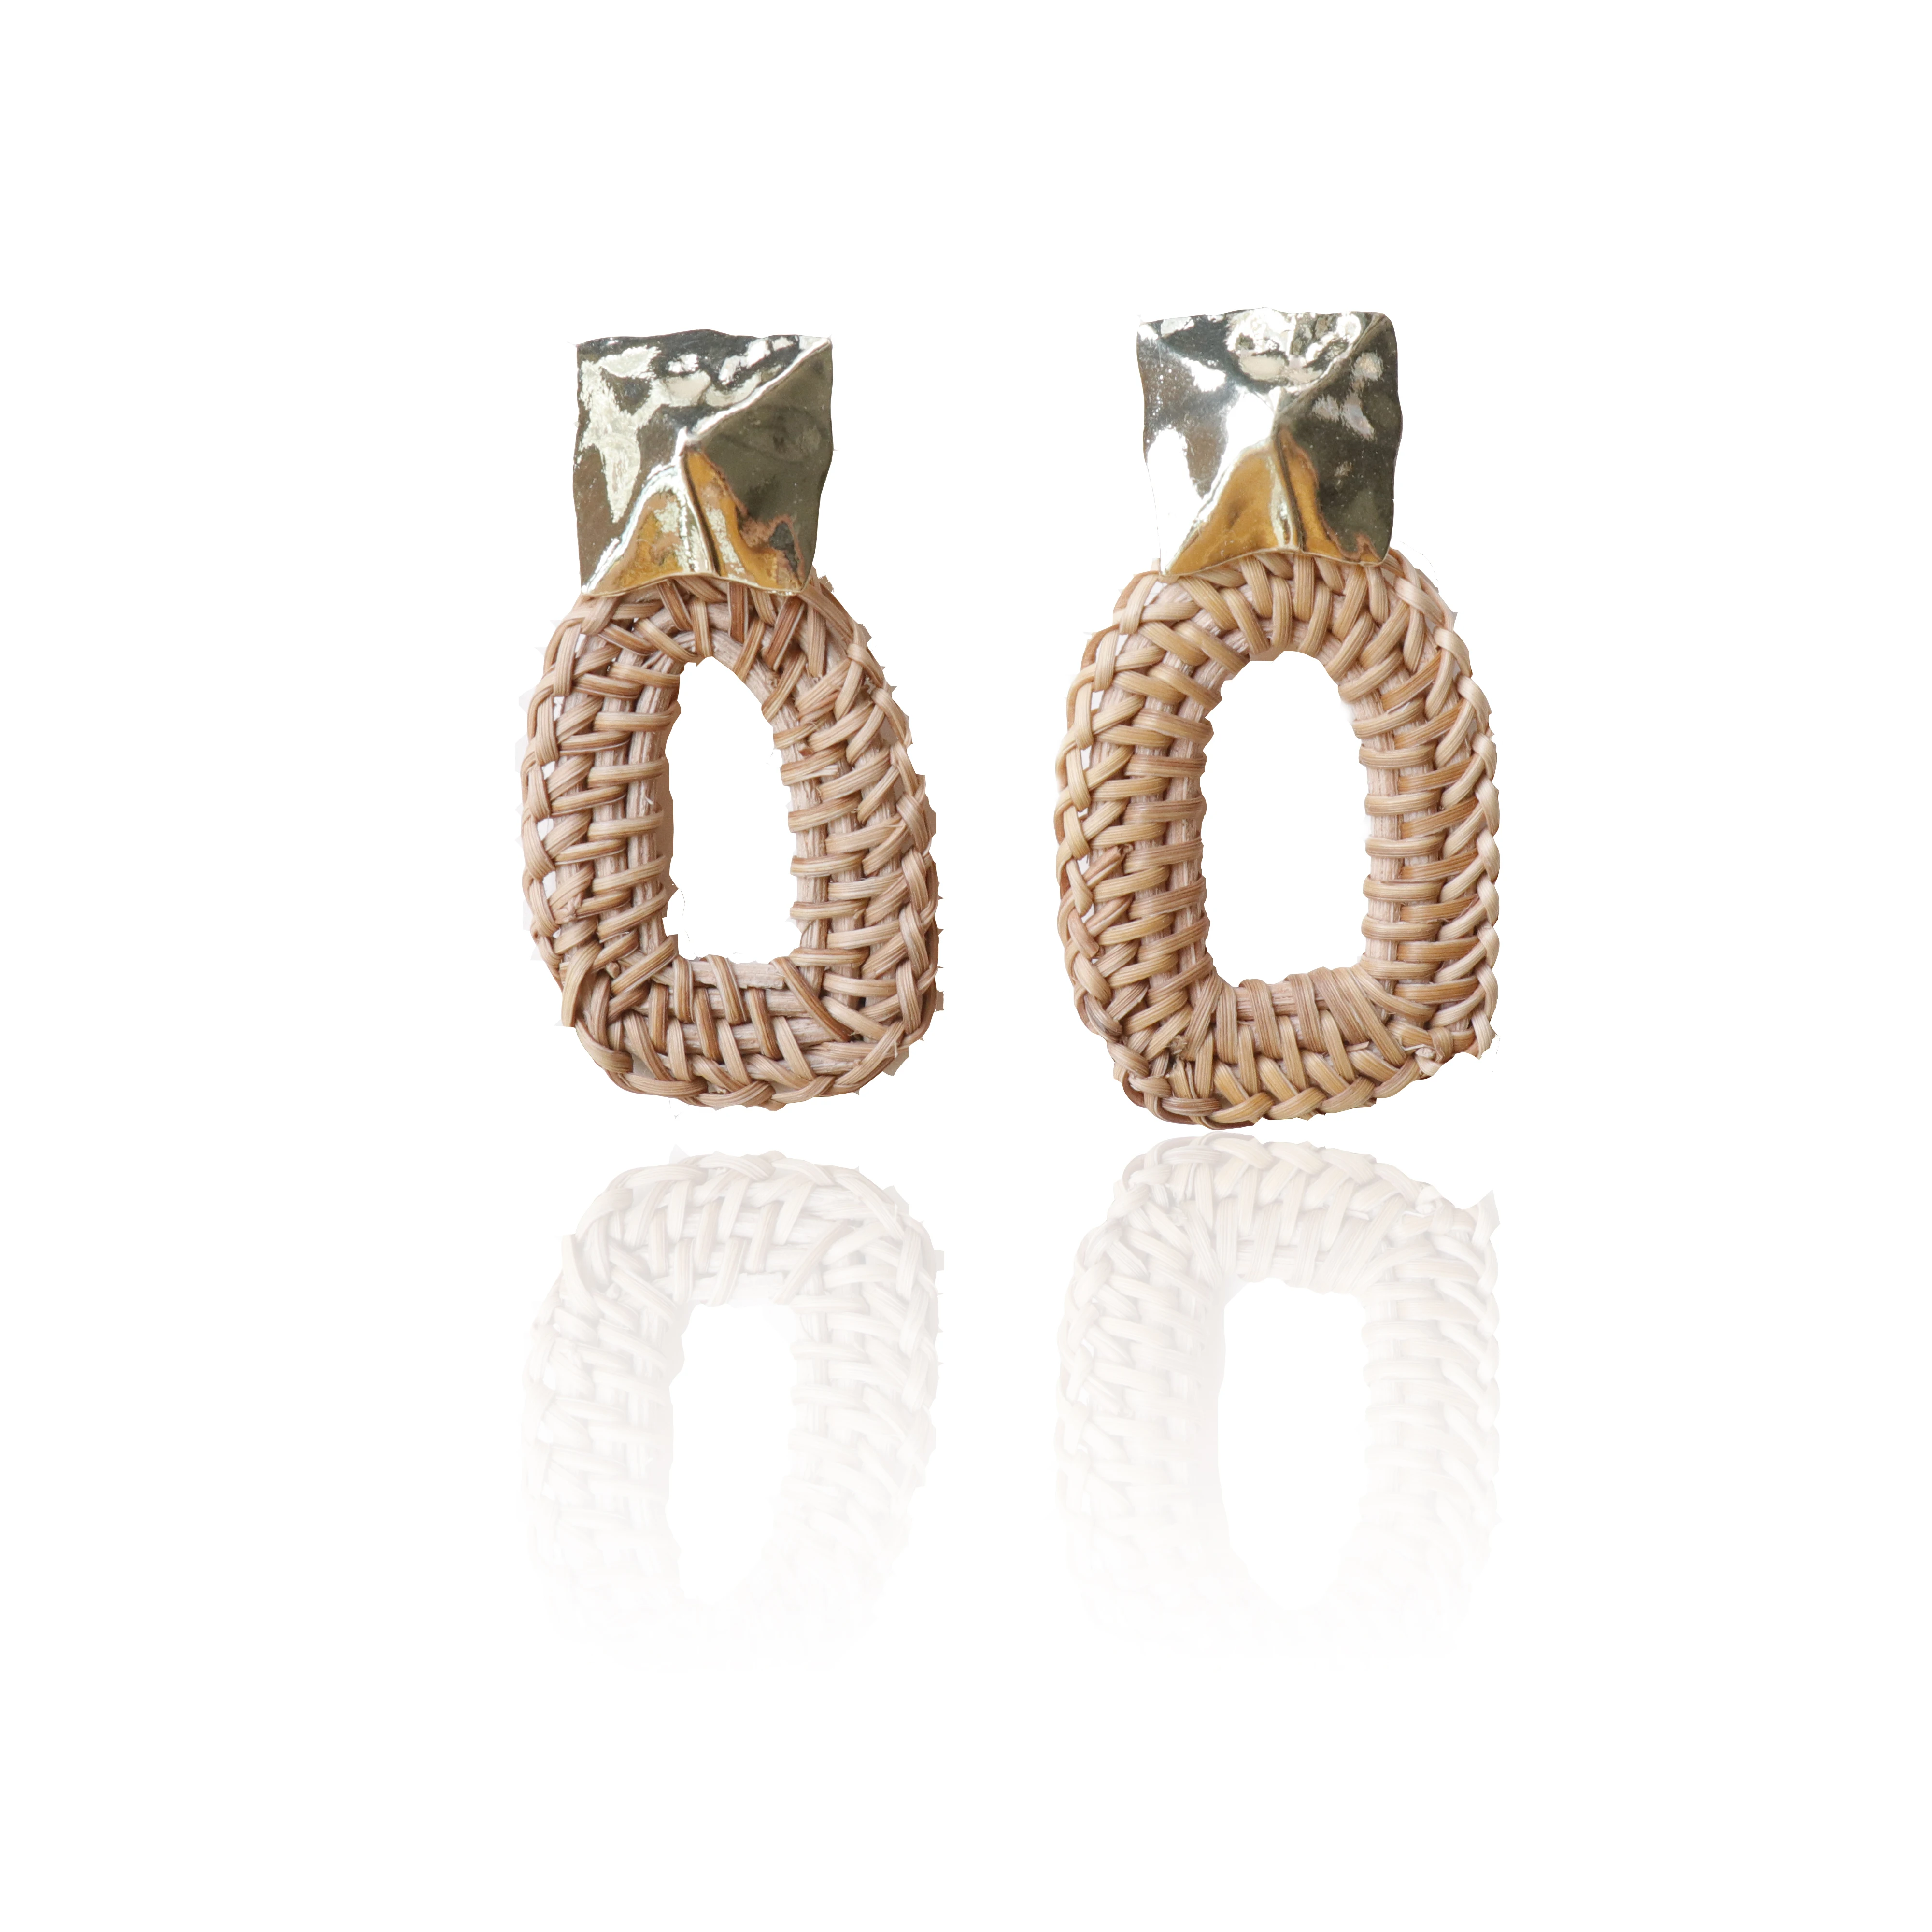 

Wholesale 2019 trending new model handmade wood bamboo women rattan earring jewelry drop earrings, Colorful